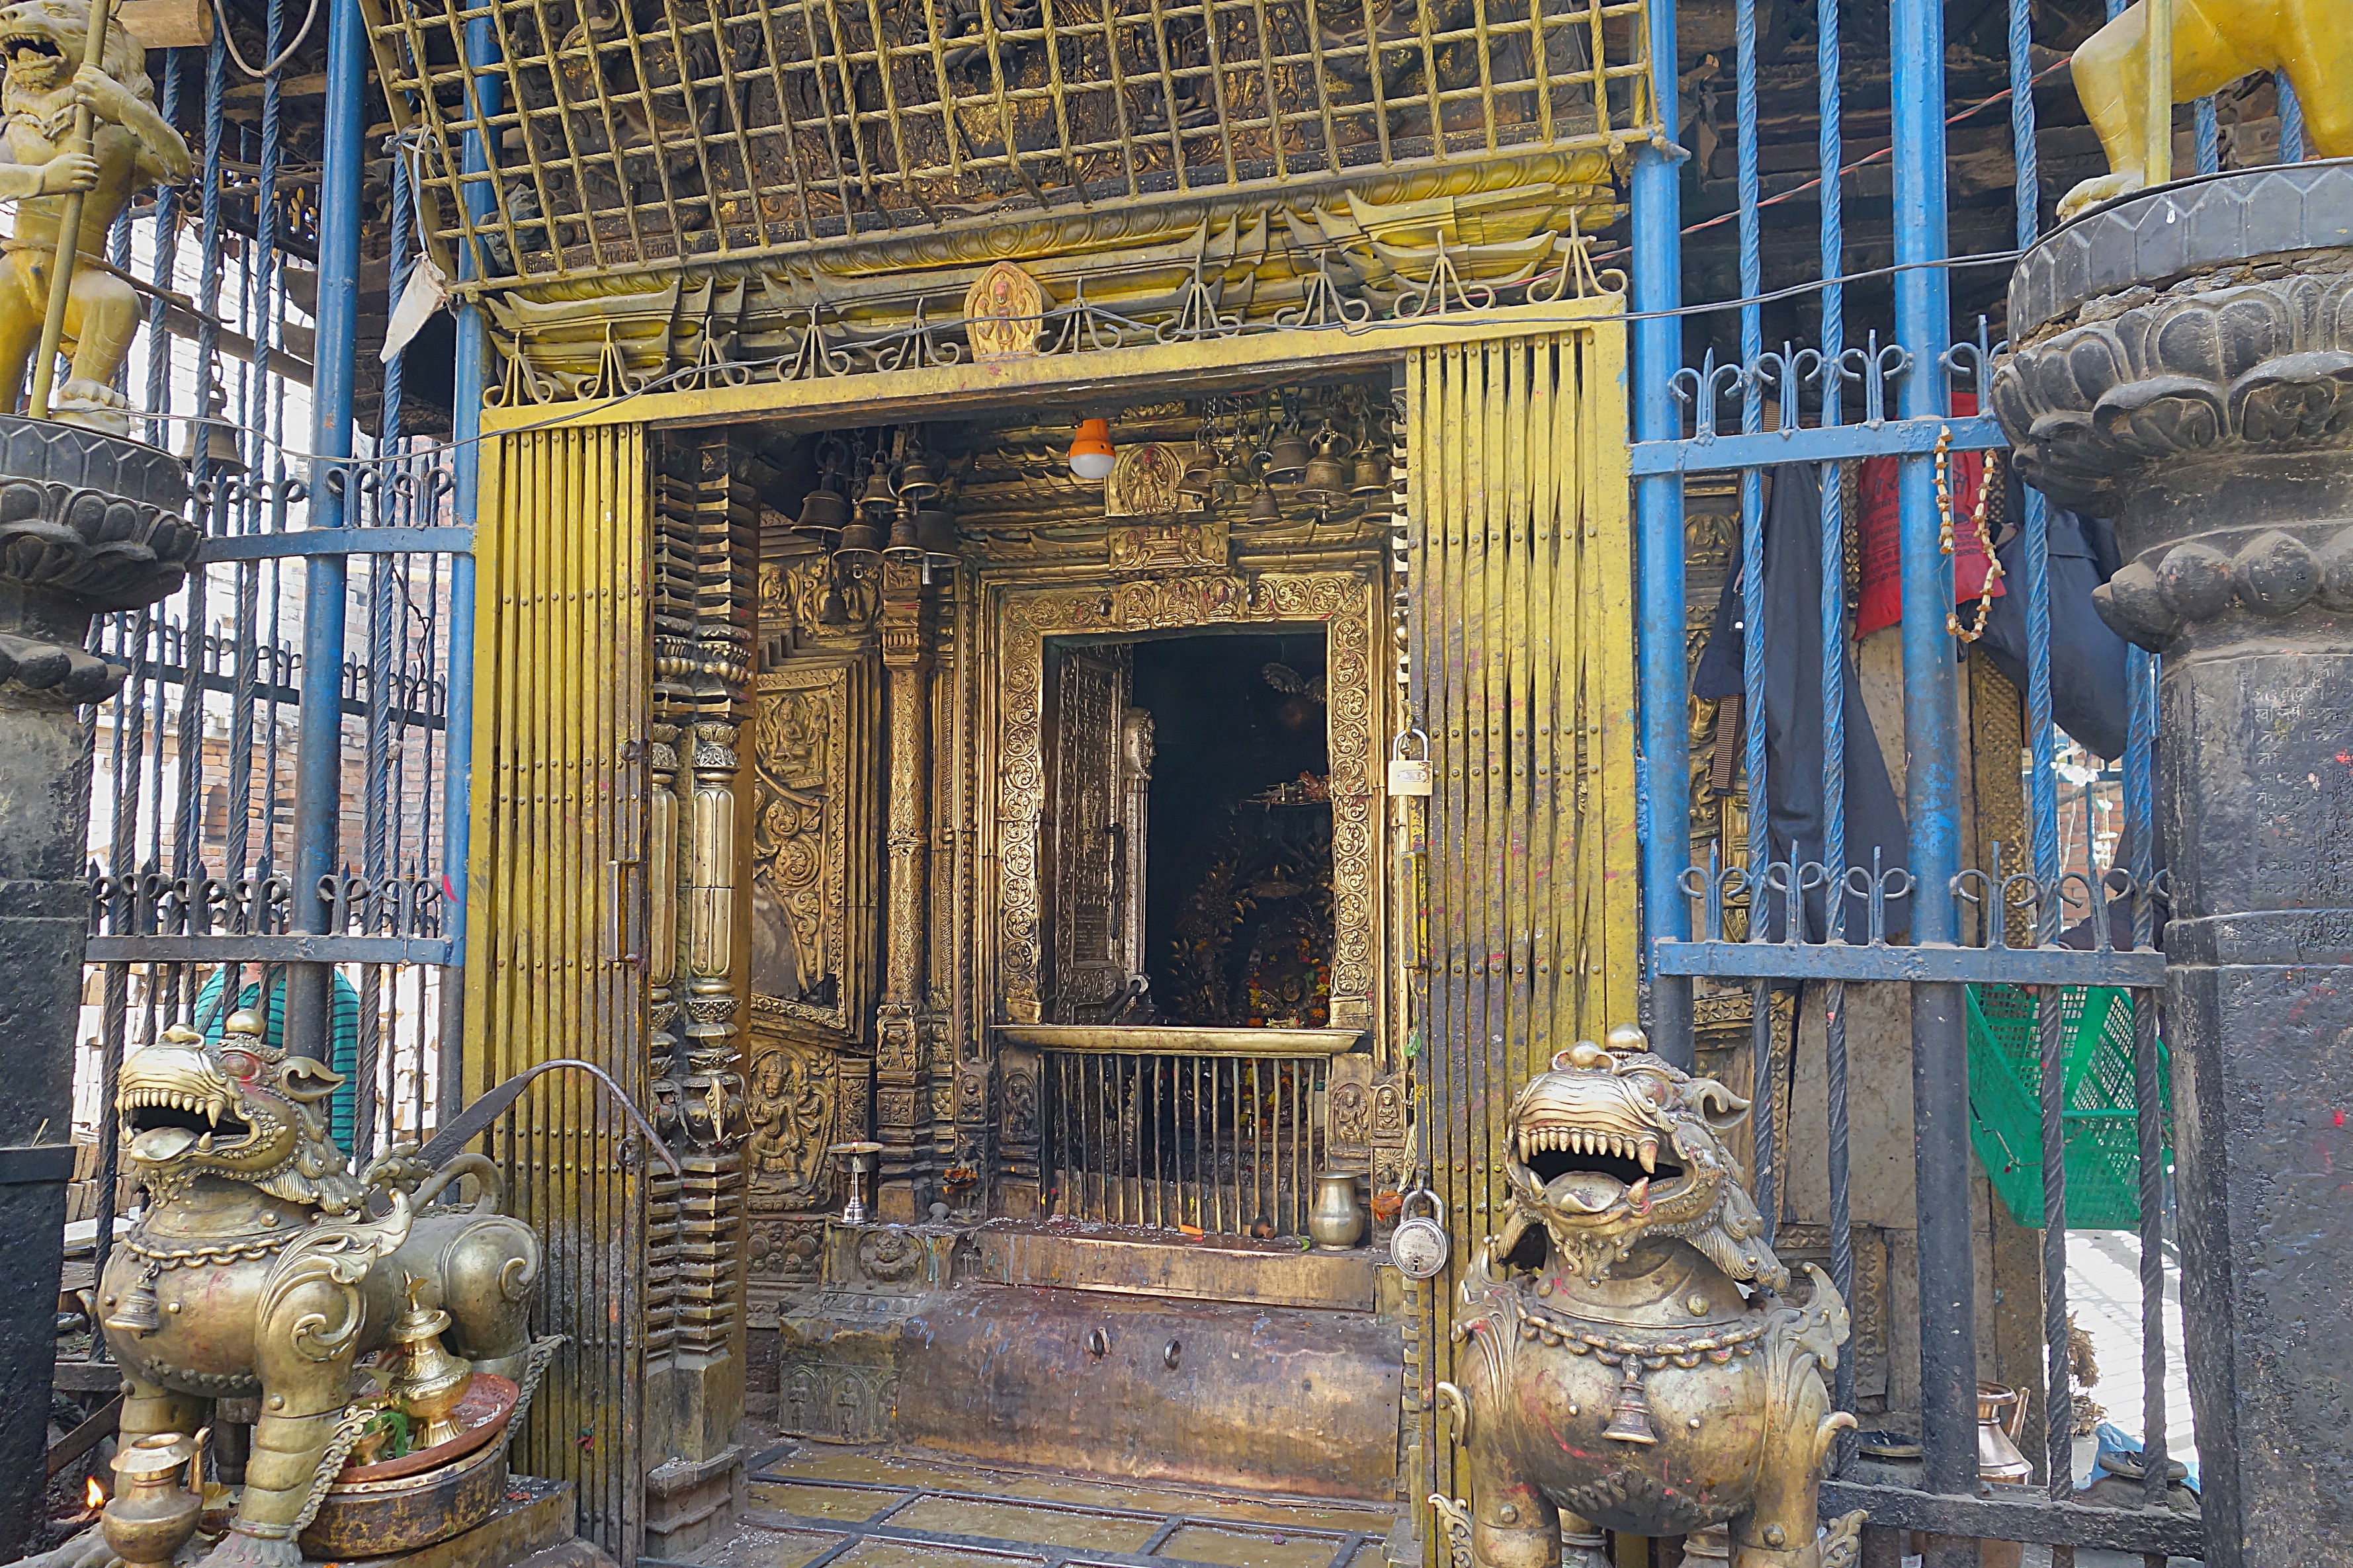 Вход в индуистский храм в Бхактапуре. Фото Морошкина В.В.